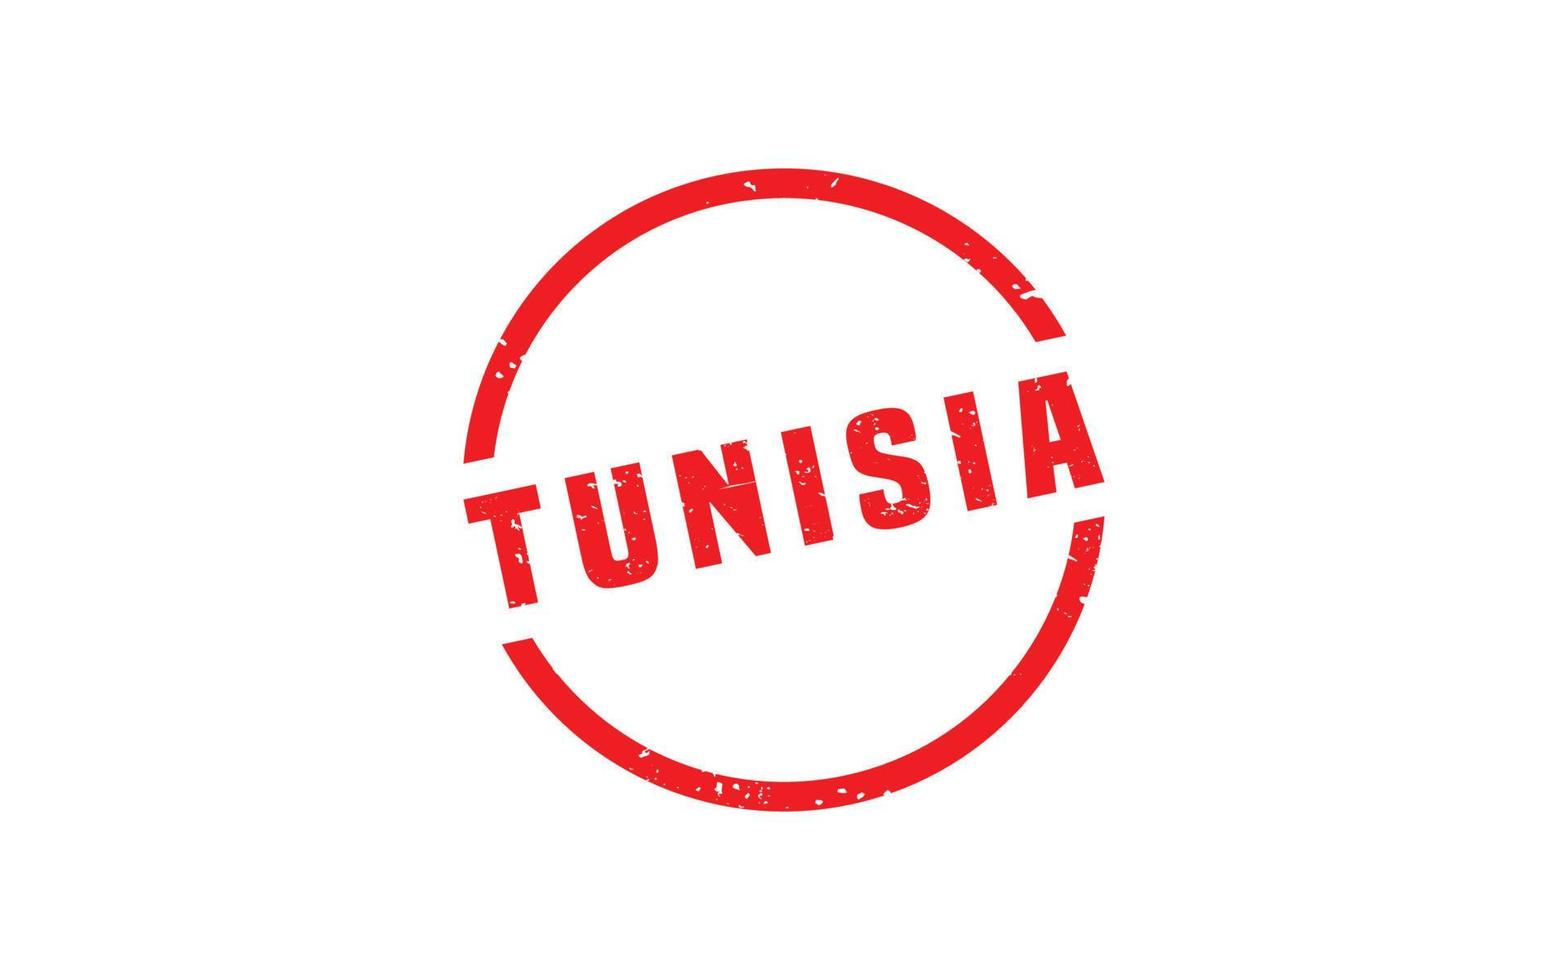 Tunísia carimbo borracha com grunge estilo em branco fundo vetor